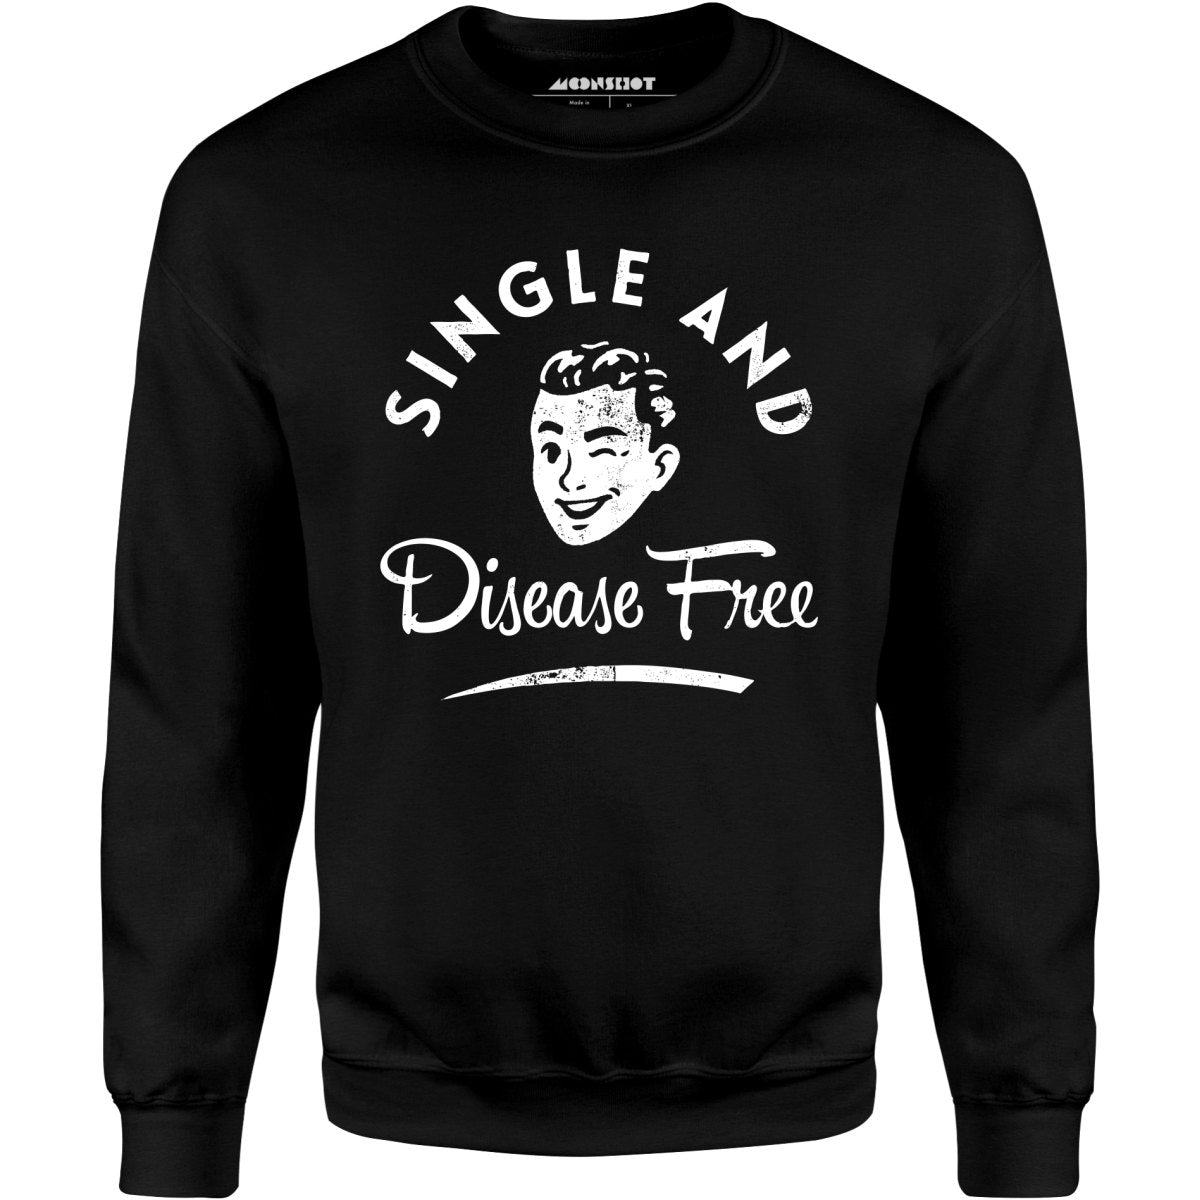 Single and Disease Free - Unisex Sweatshirt